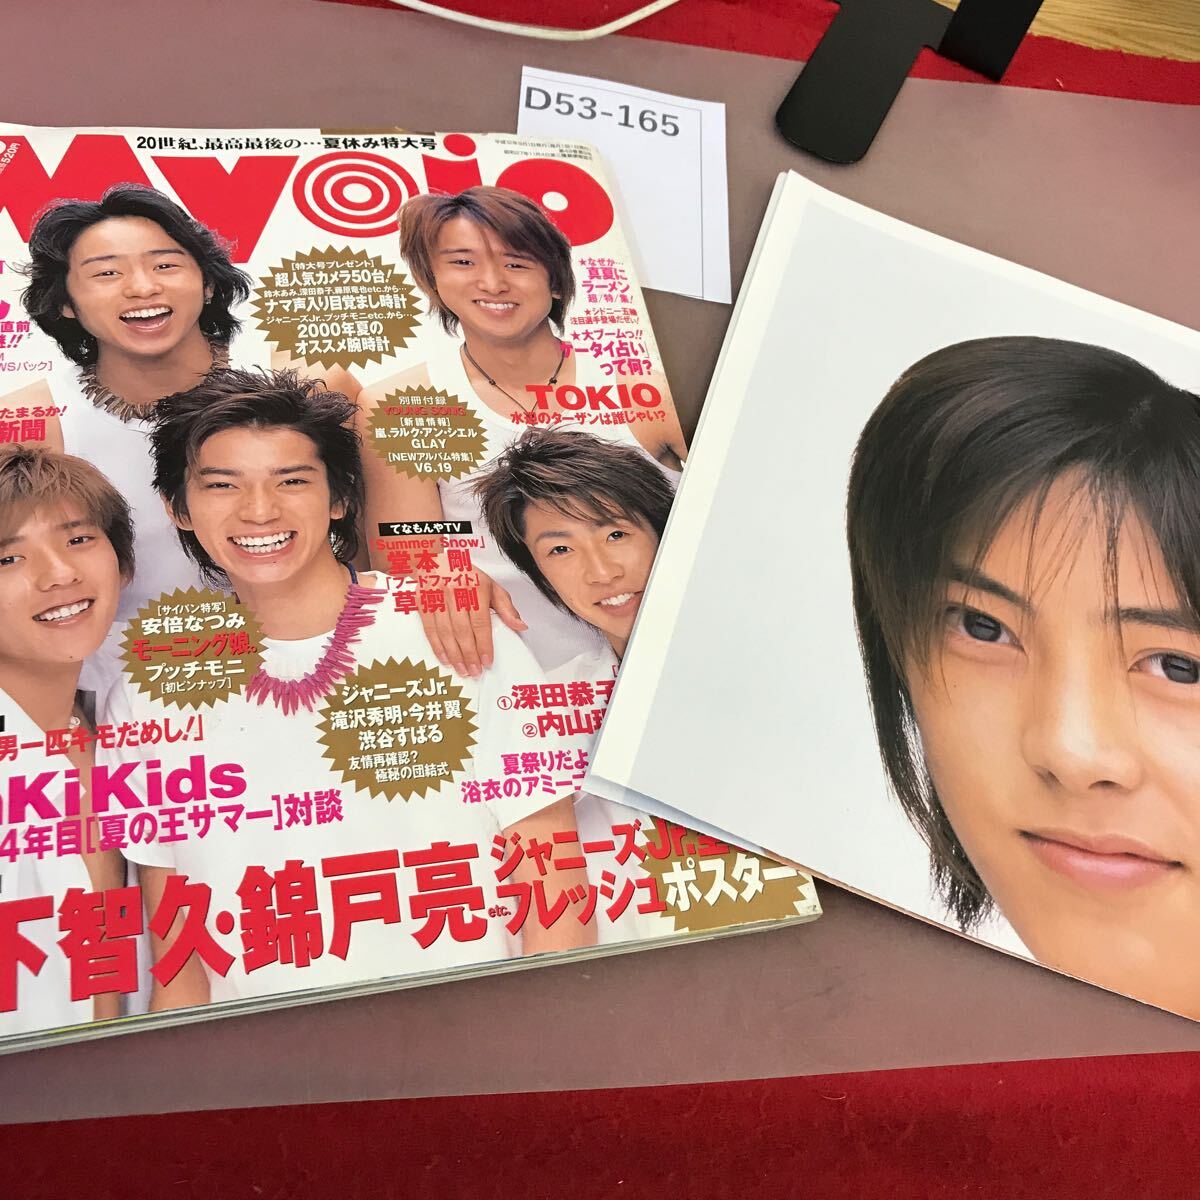 D53-165 Myojo 2000.9 集英社 平成12年9月1日発行 KinKi Kids 嵐 V6 TOKIO 他 付録付き_画像1